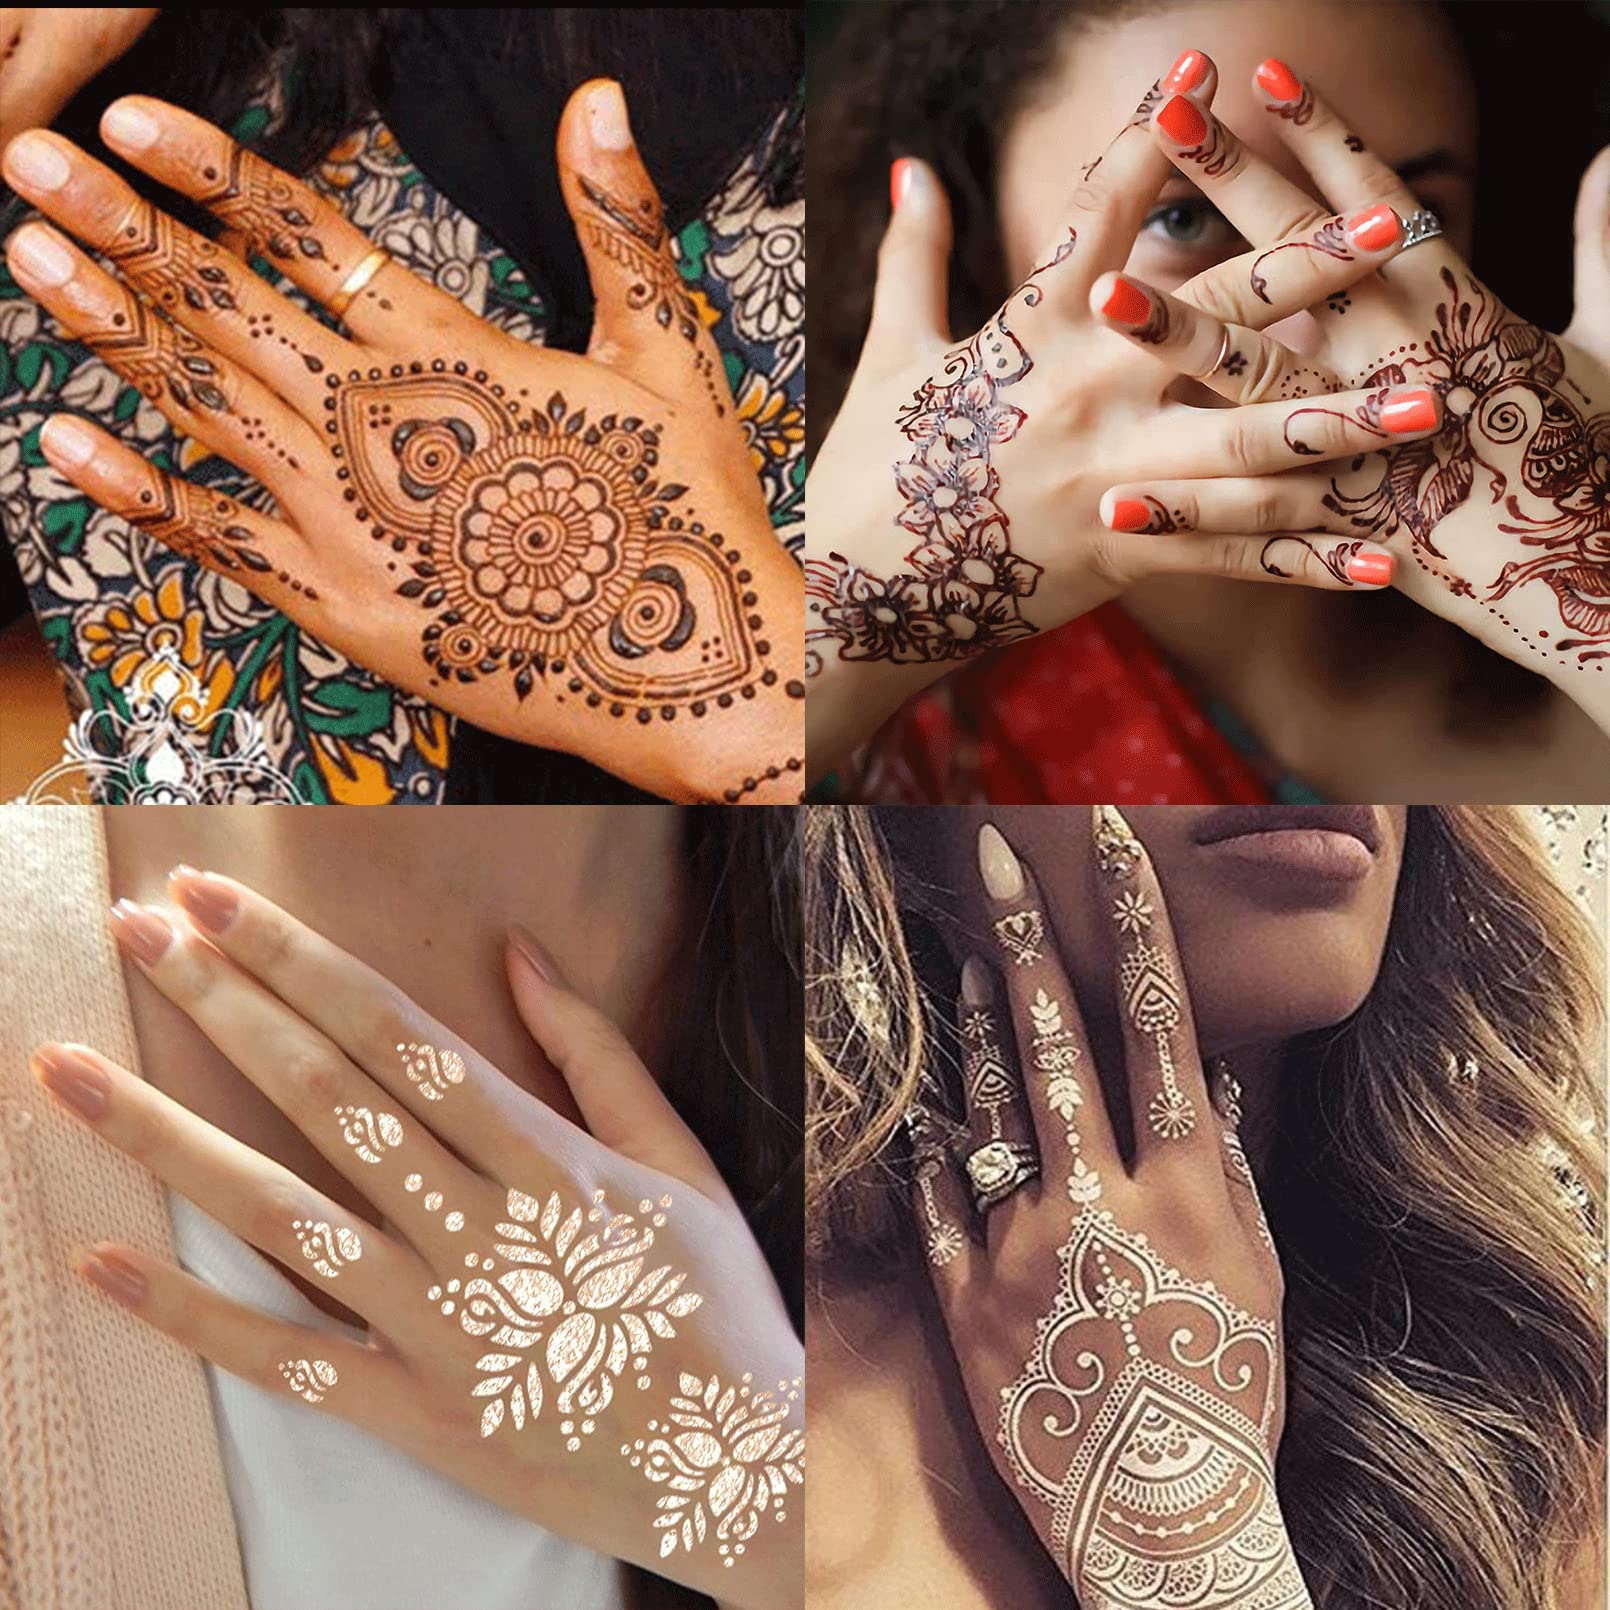 24 Sheets Henna Tattoo Stencils Kit for Hand, Indian Arabian Temporary Tattoo Template Mehndi Stencil Stickers